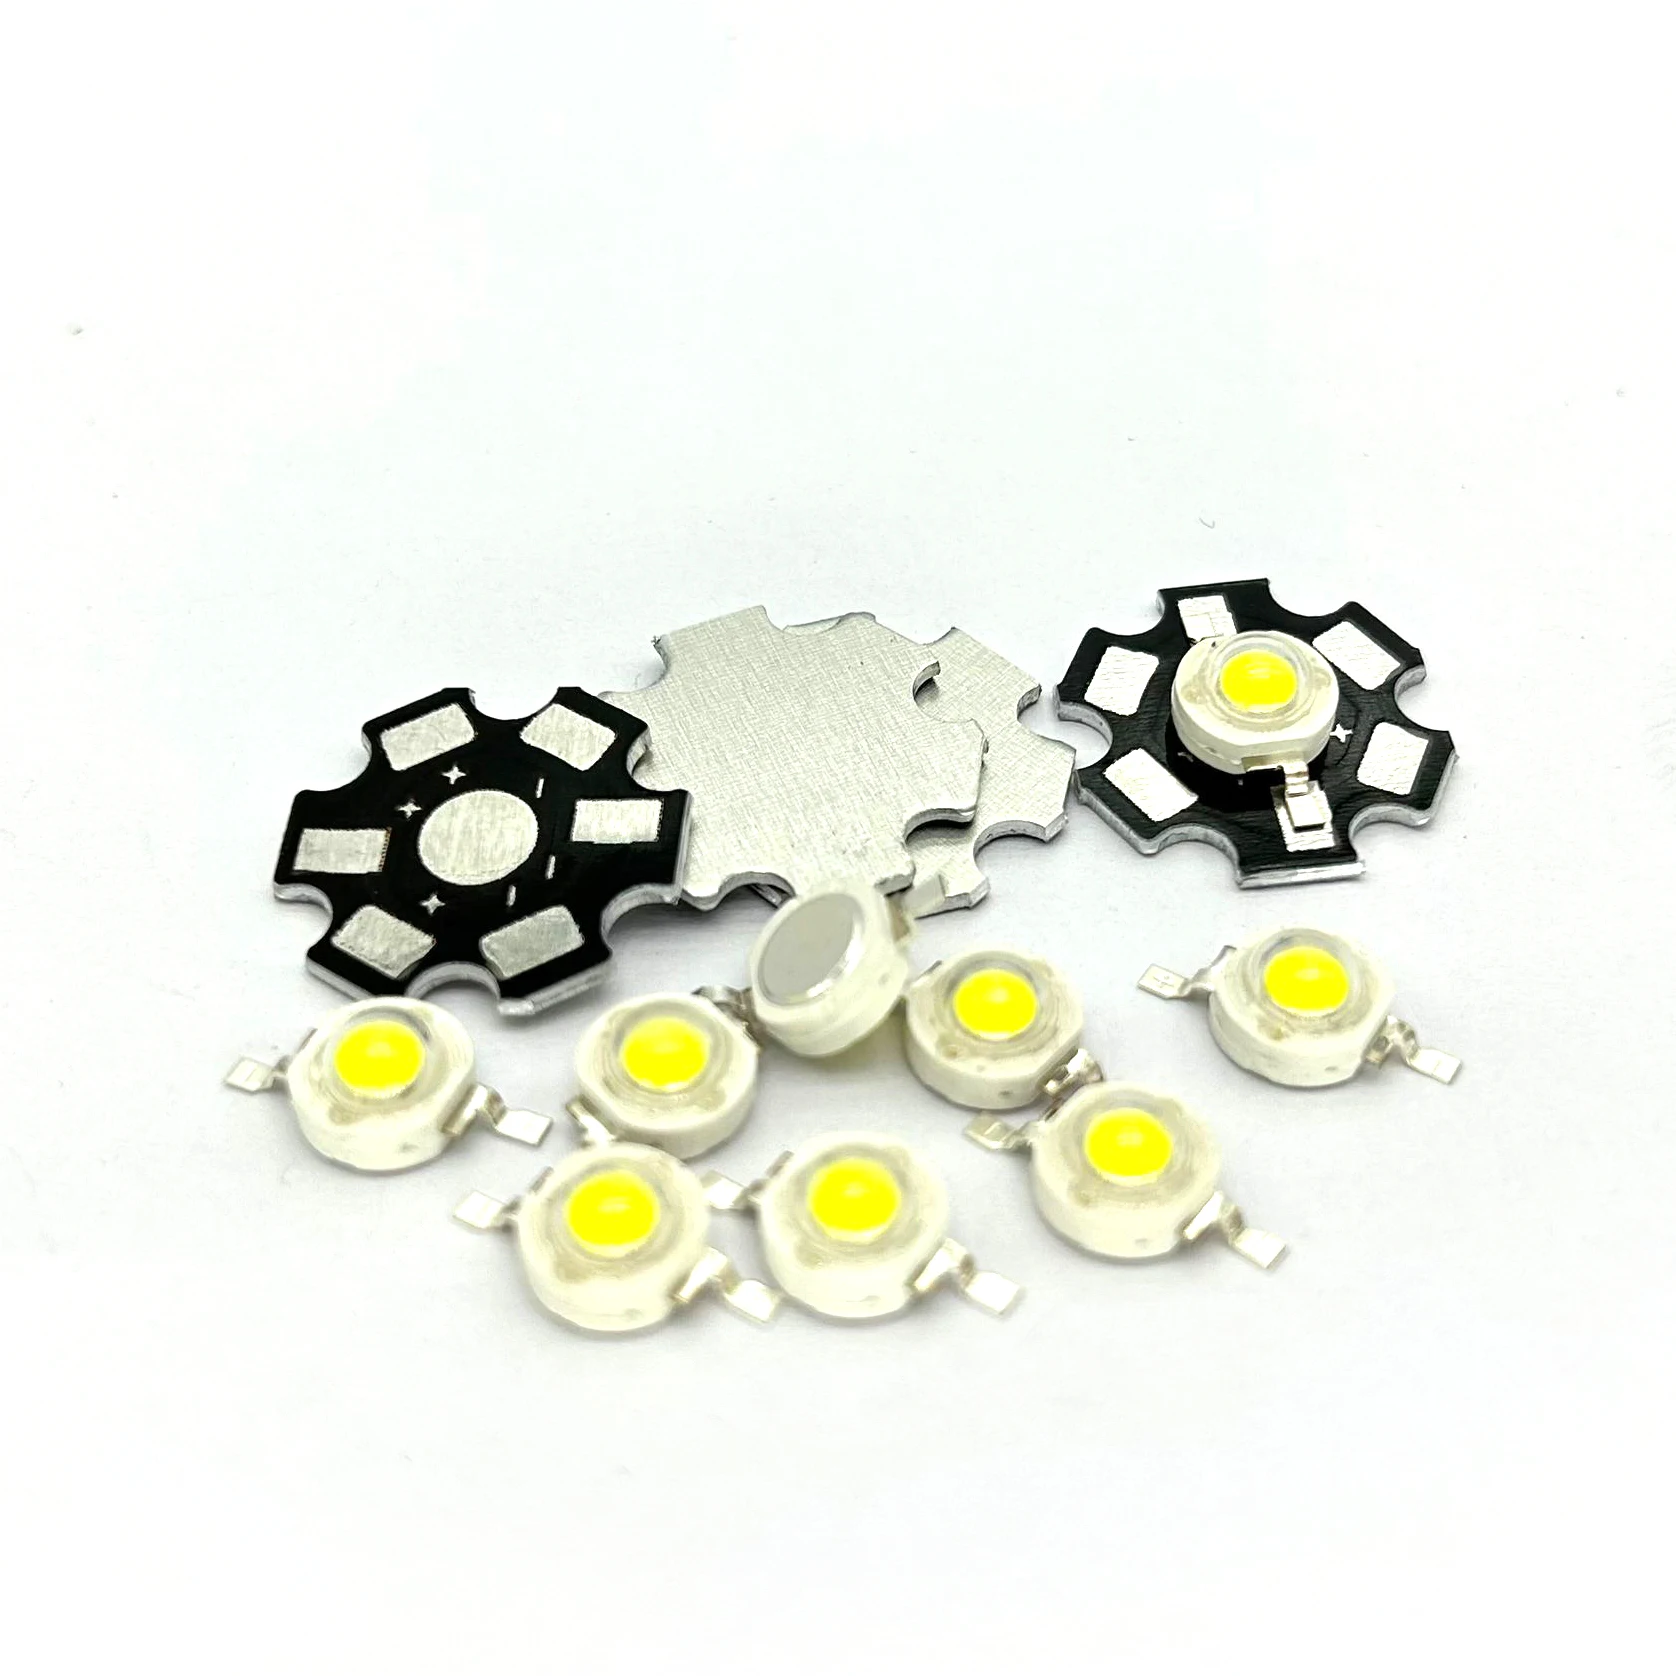 

100pcs 3.2V-3.4V 5W Bulbs LED Chip COB Lamp Diodes Pure White/Warm White/Natural White/Cool White for Spotlight Downlight Light